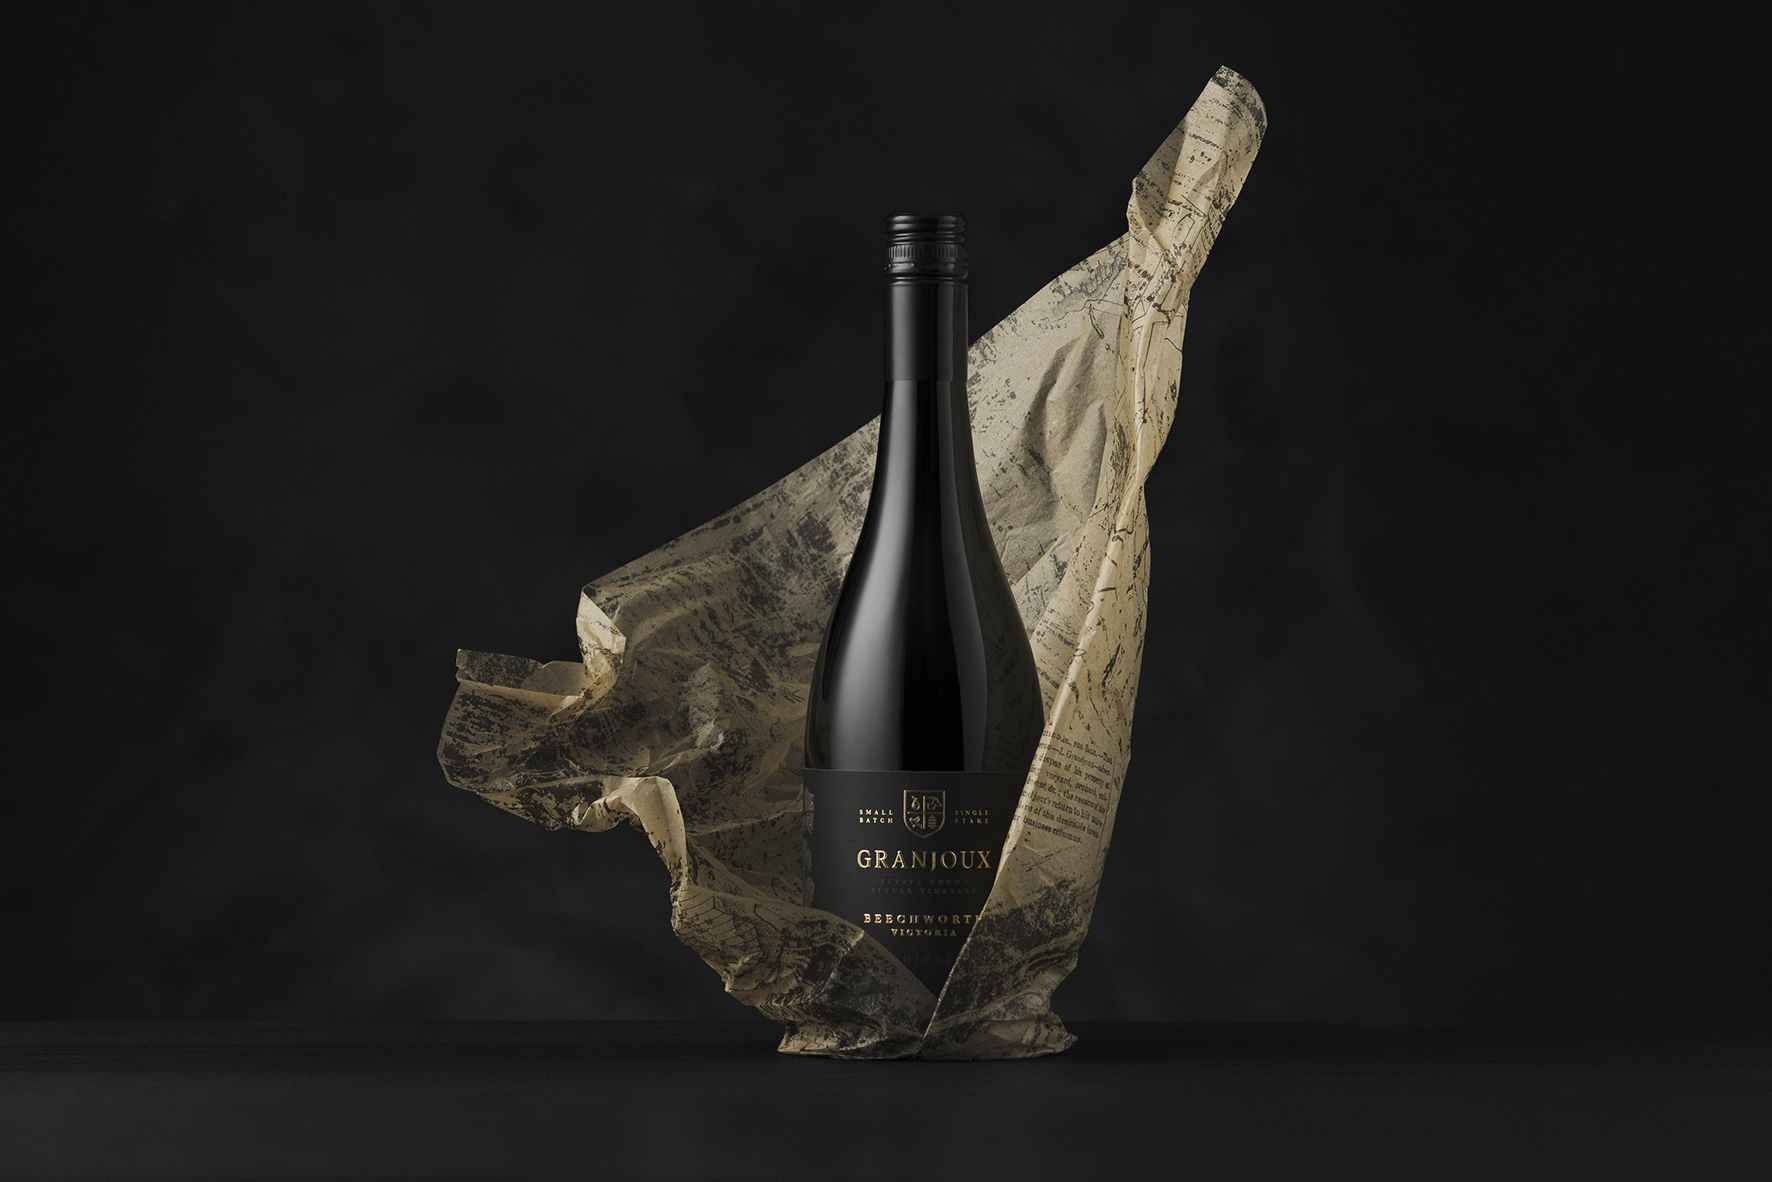 Rejuvenating a Vineyard's Legacy: Studio Guild's Bespoke Wine Packaging for Granjoux